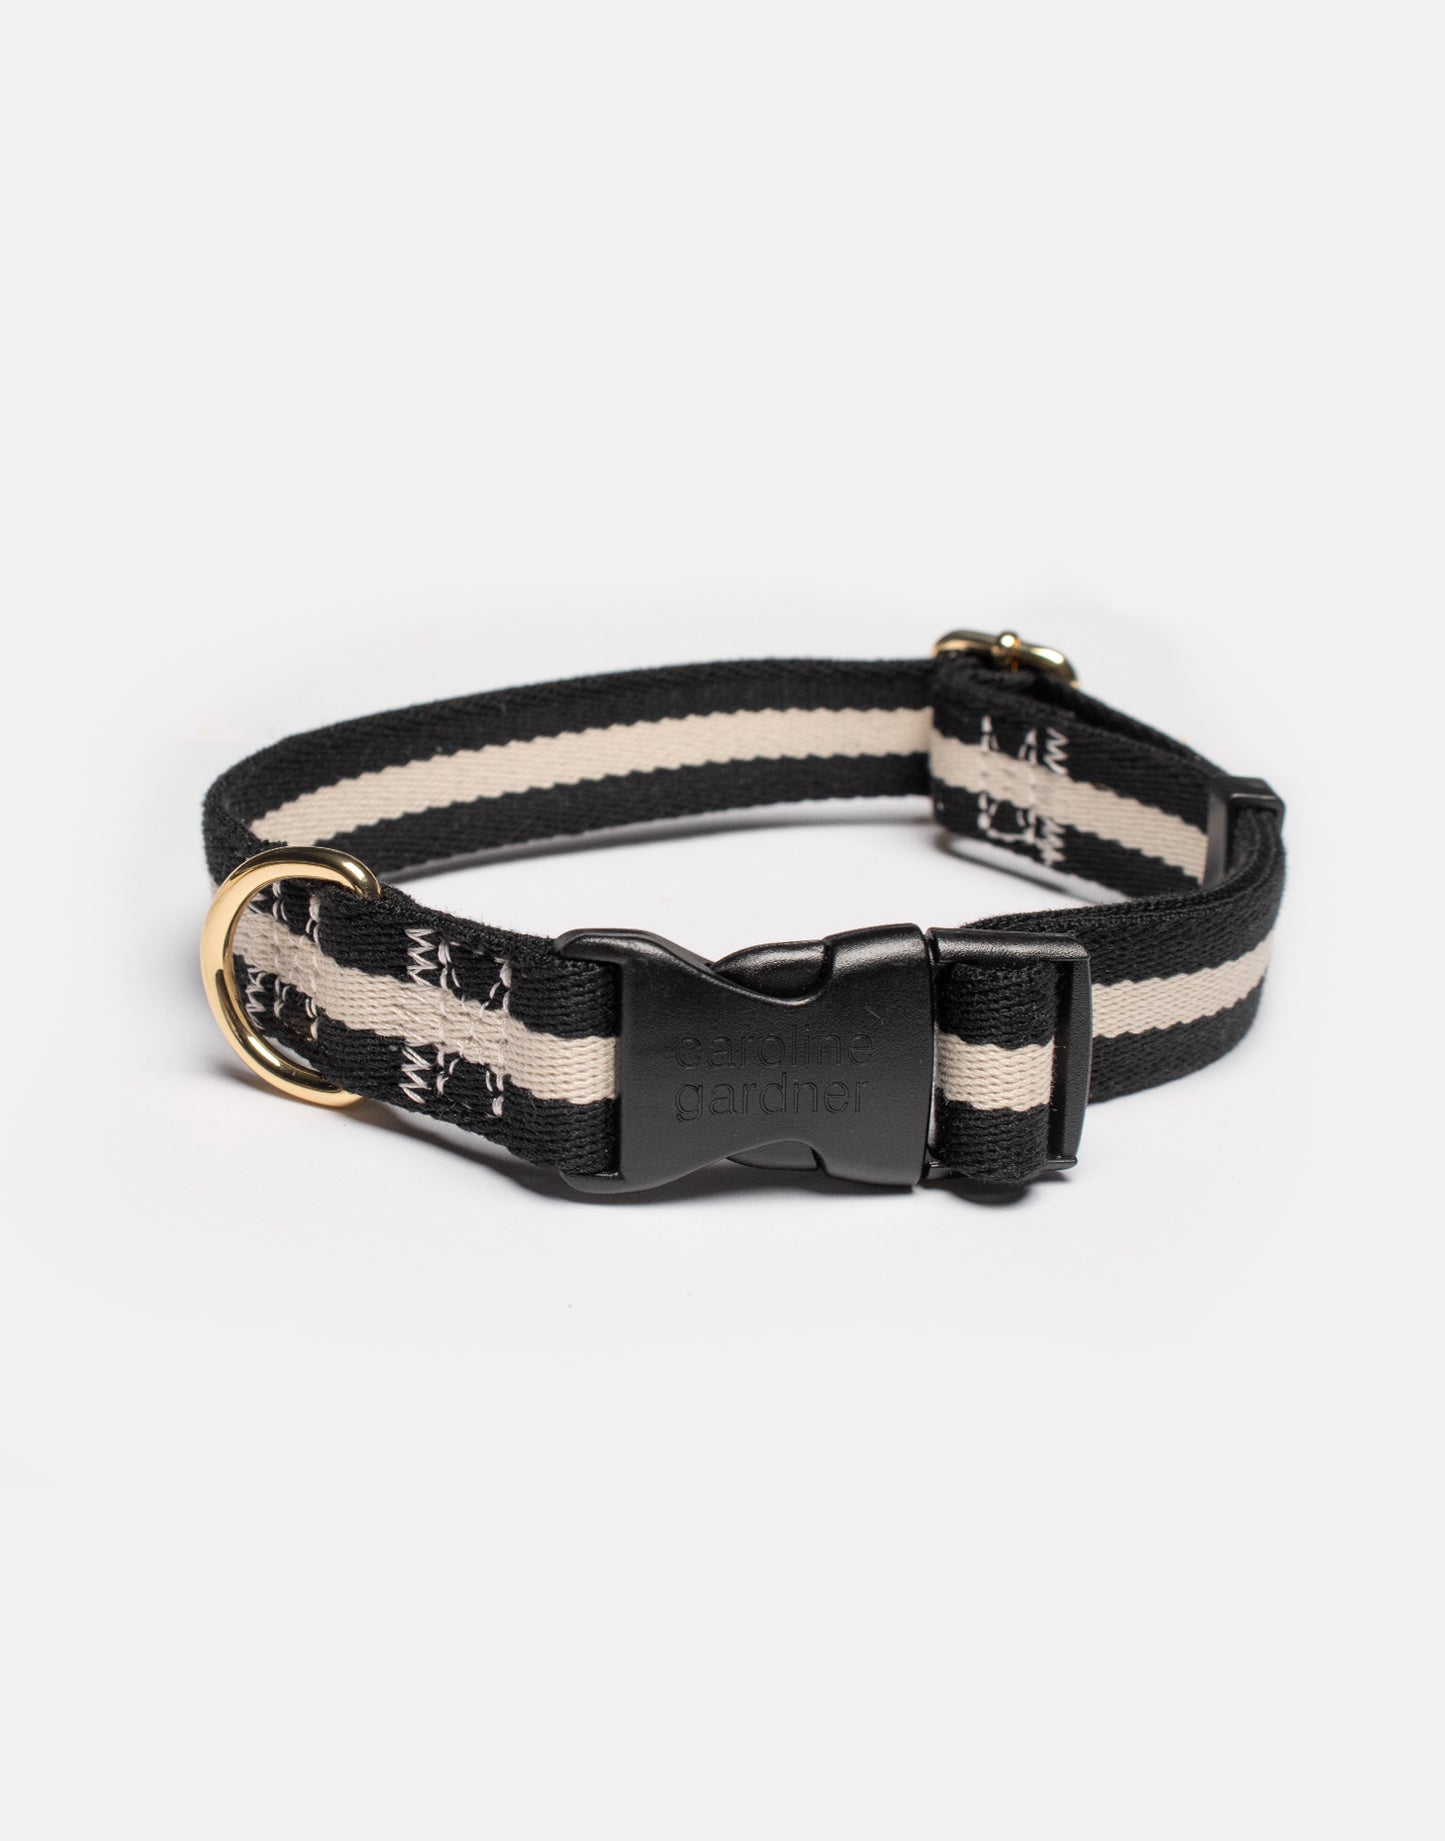 Black and White stripe dog collar